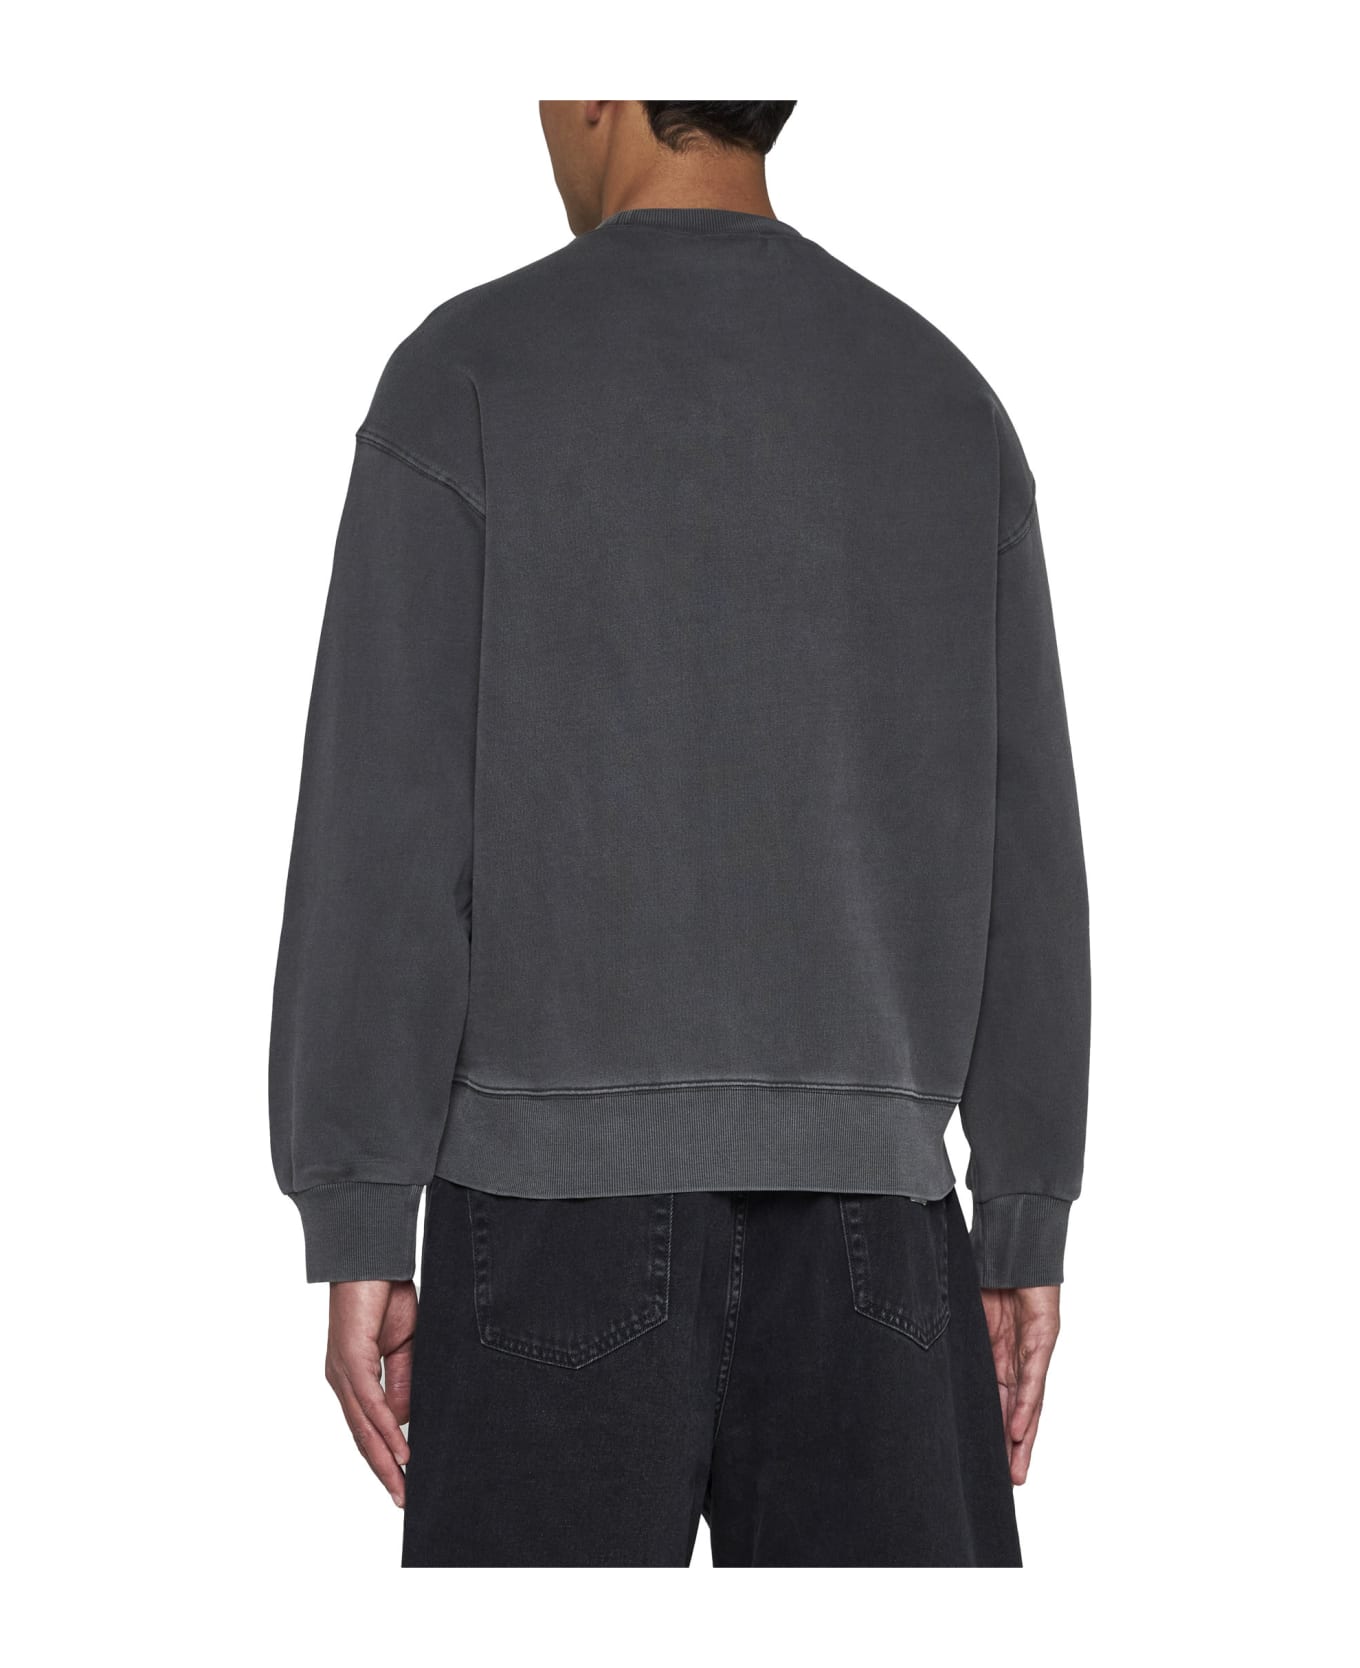 Carhartt Sweater - Charcoal garment dyed